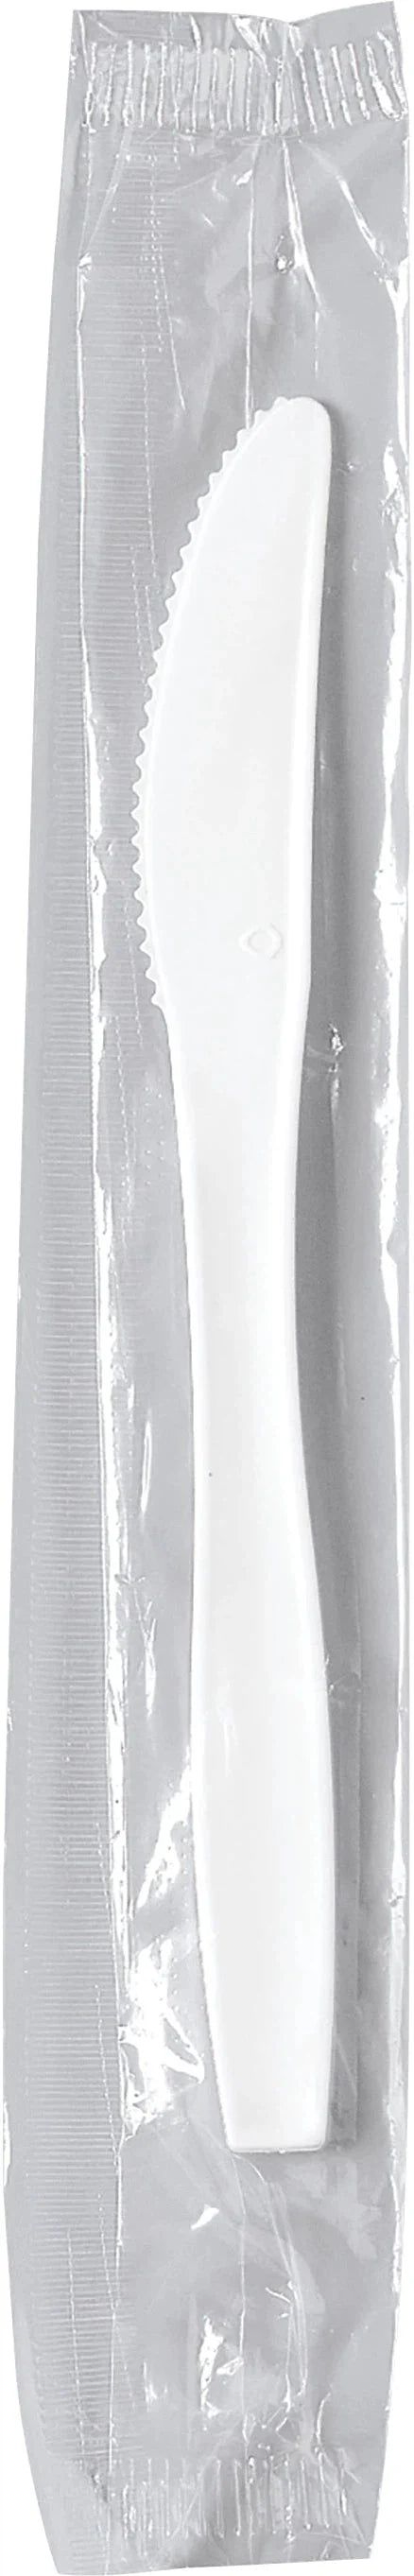 Dart Container - Regal White Medium Weight Cutlery Knife, 1000/Cs - MOWK